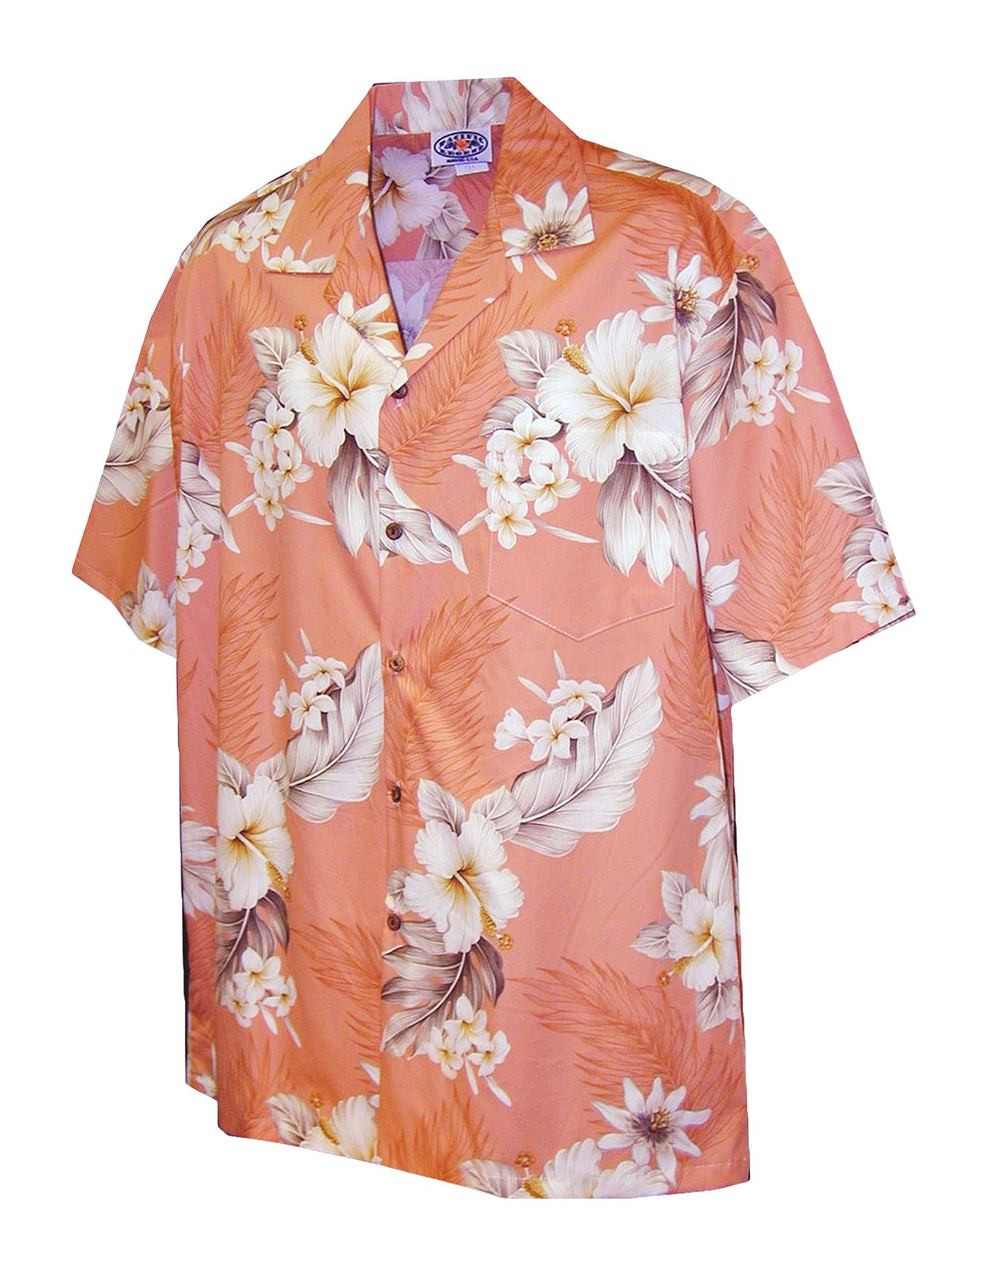 Hawaiian Aloha Shirt For Women, Pacific Legend Hibiscus Island